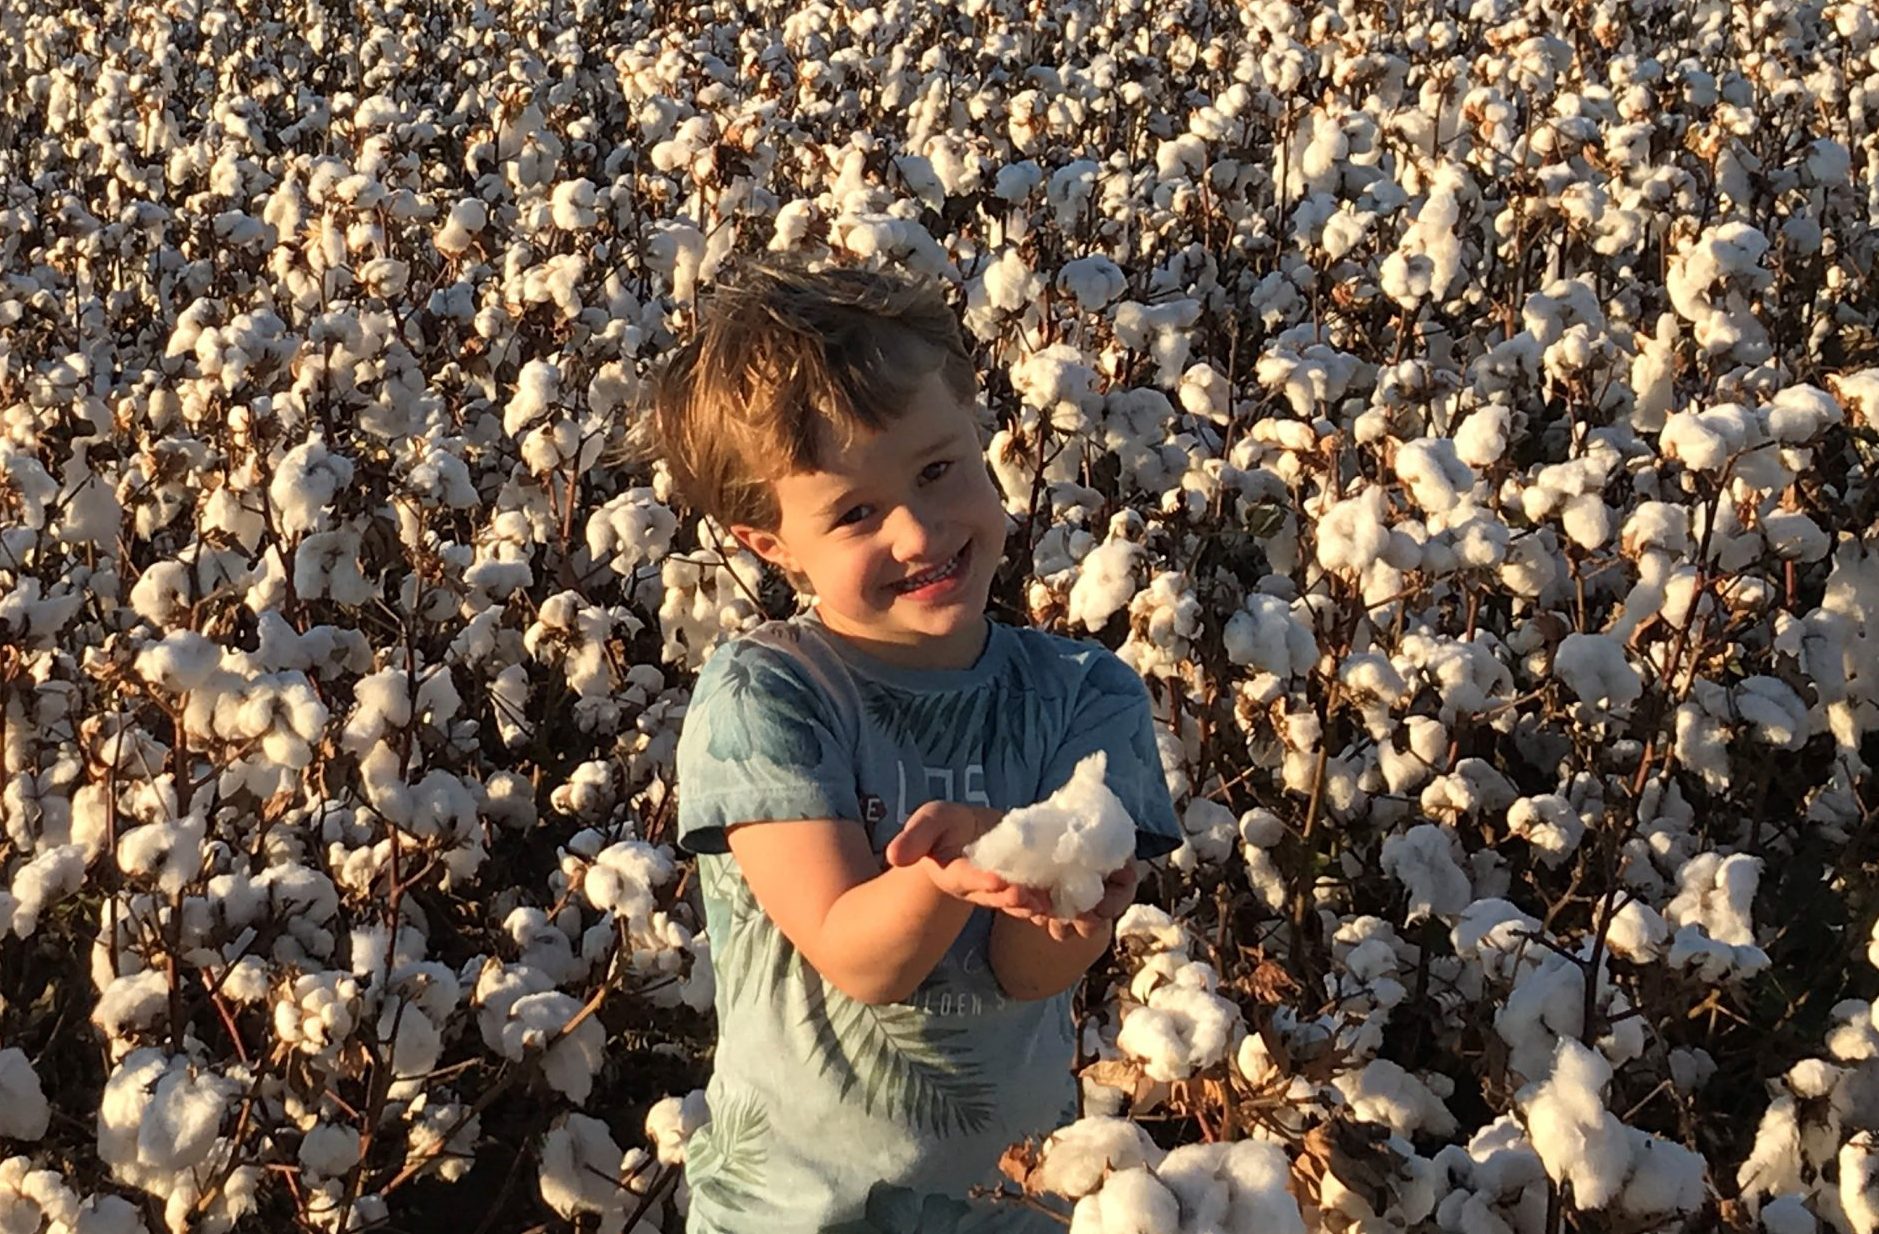 Cotton picking season